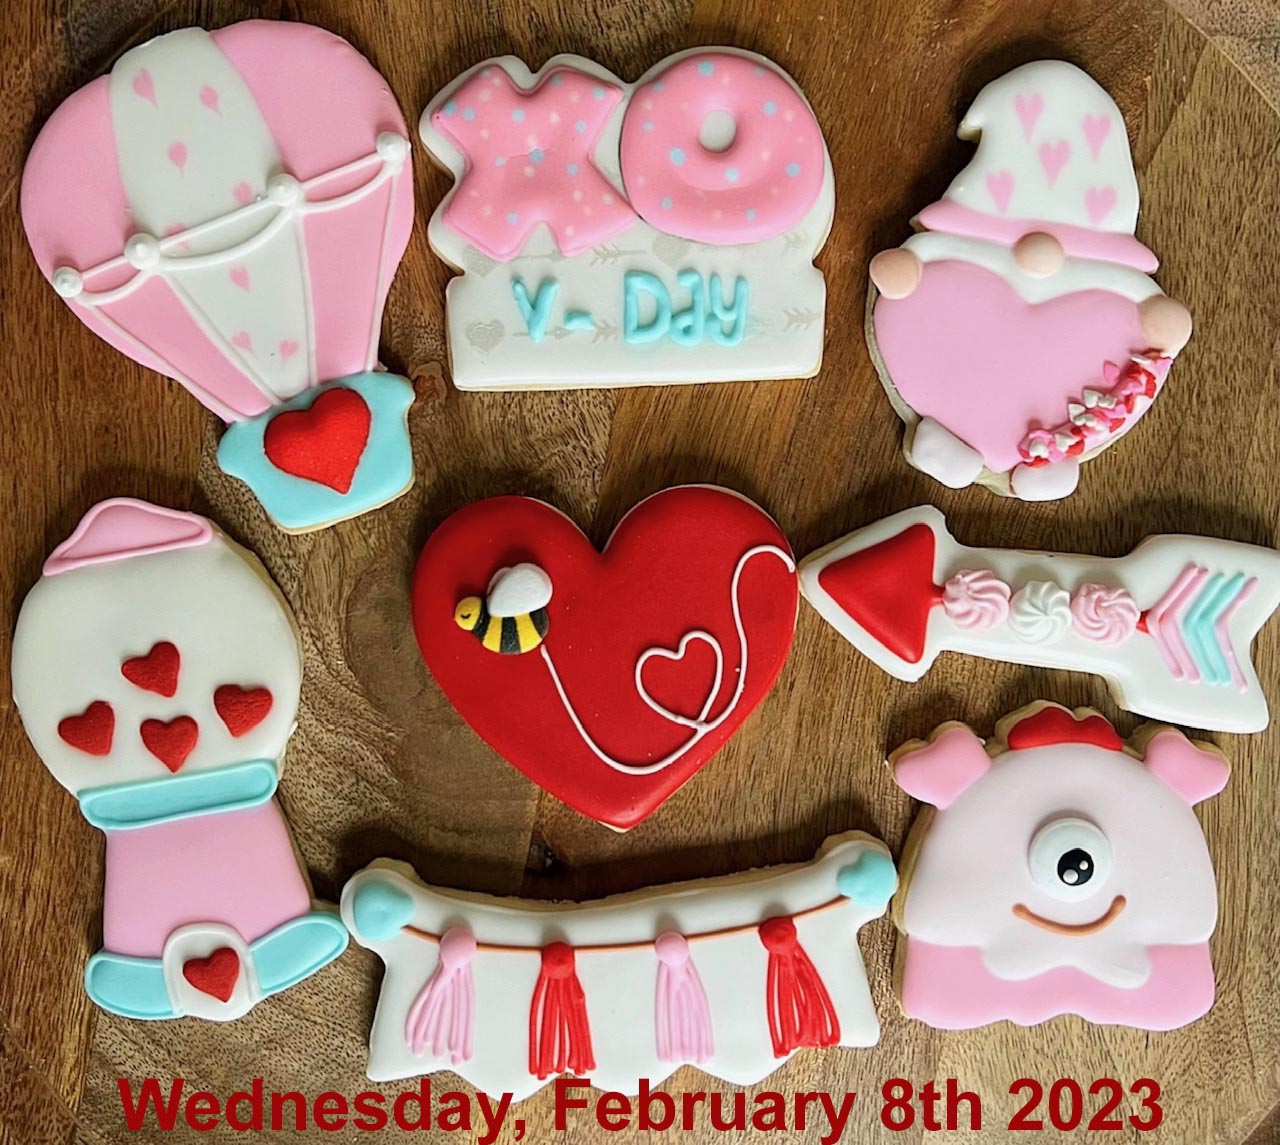 Wednesday 2/8/2023: Sugar Cookie Decorating class - Valentine Theme (Please read class details below)